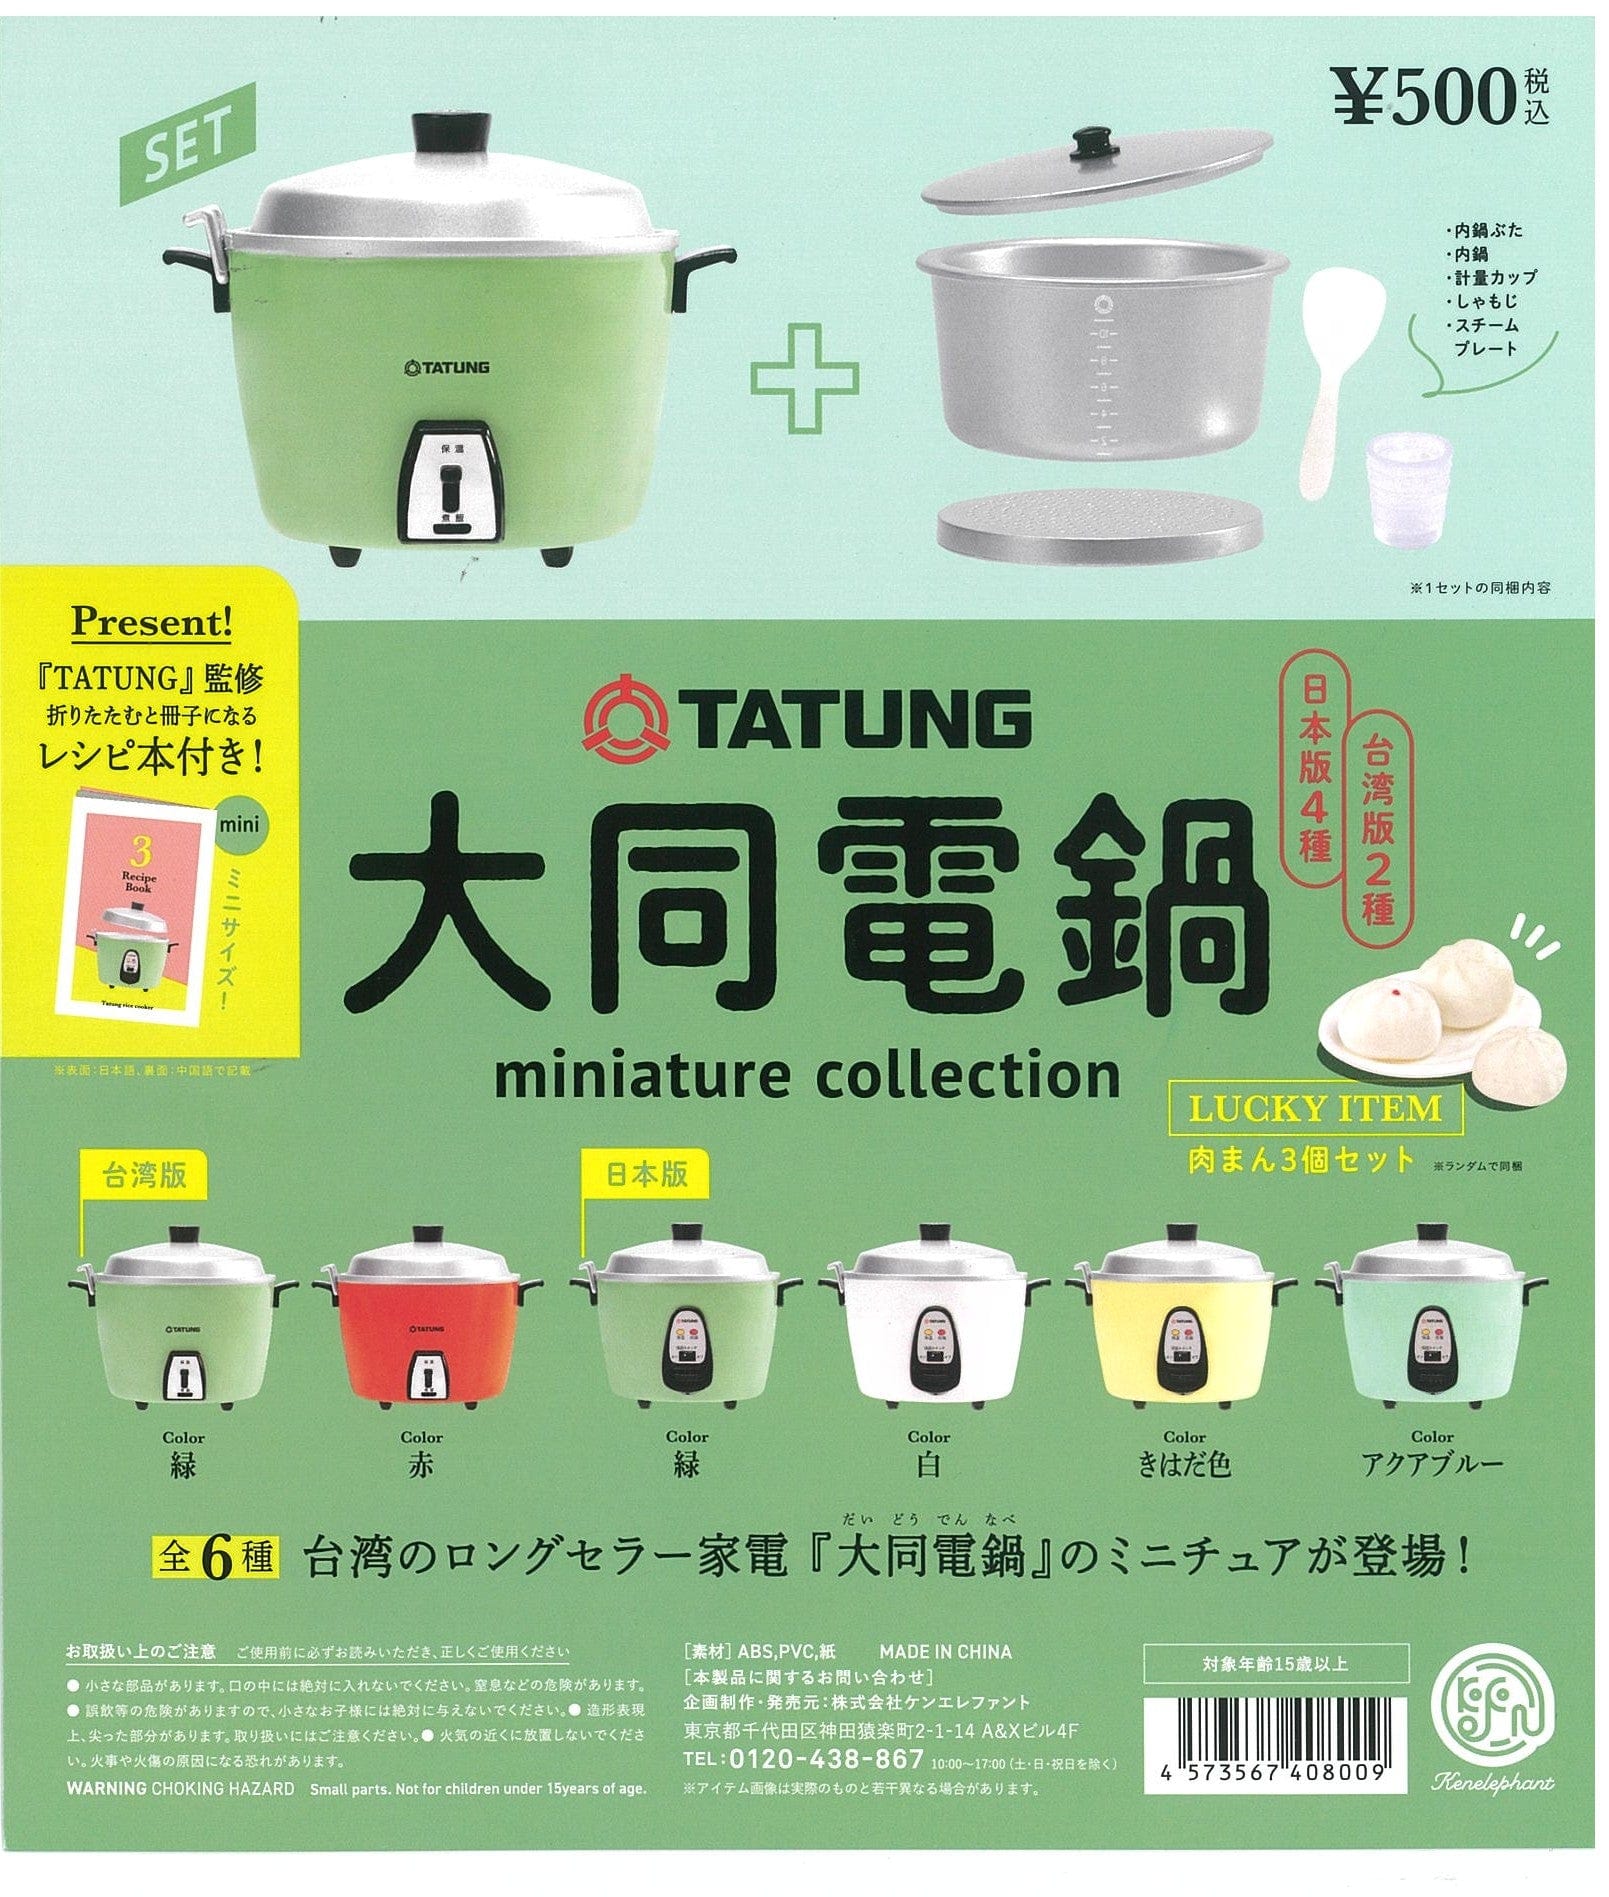 1/6 Dollhouse Miniature Retro Style TATUNG Rice Cooker Kitchen Appliance 